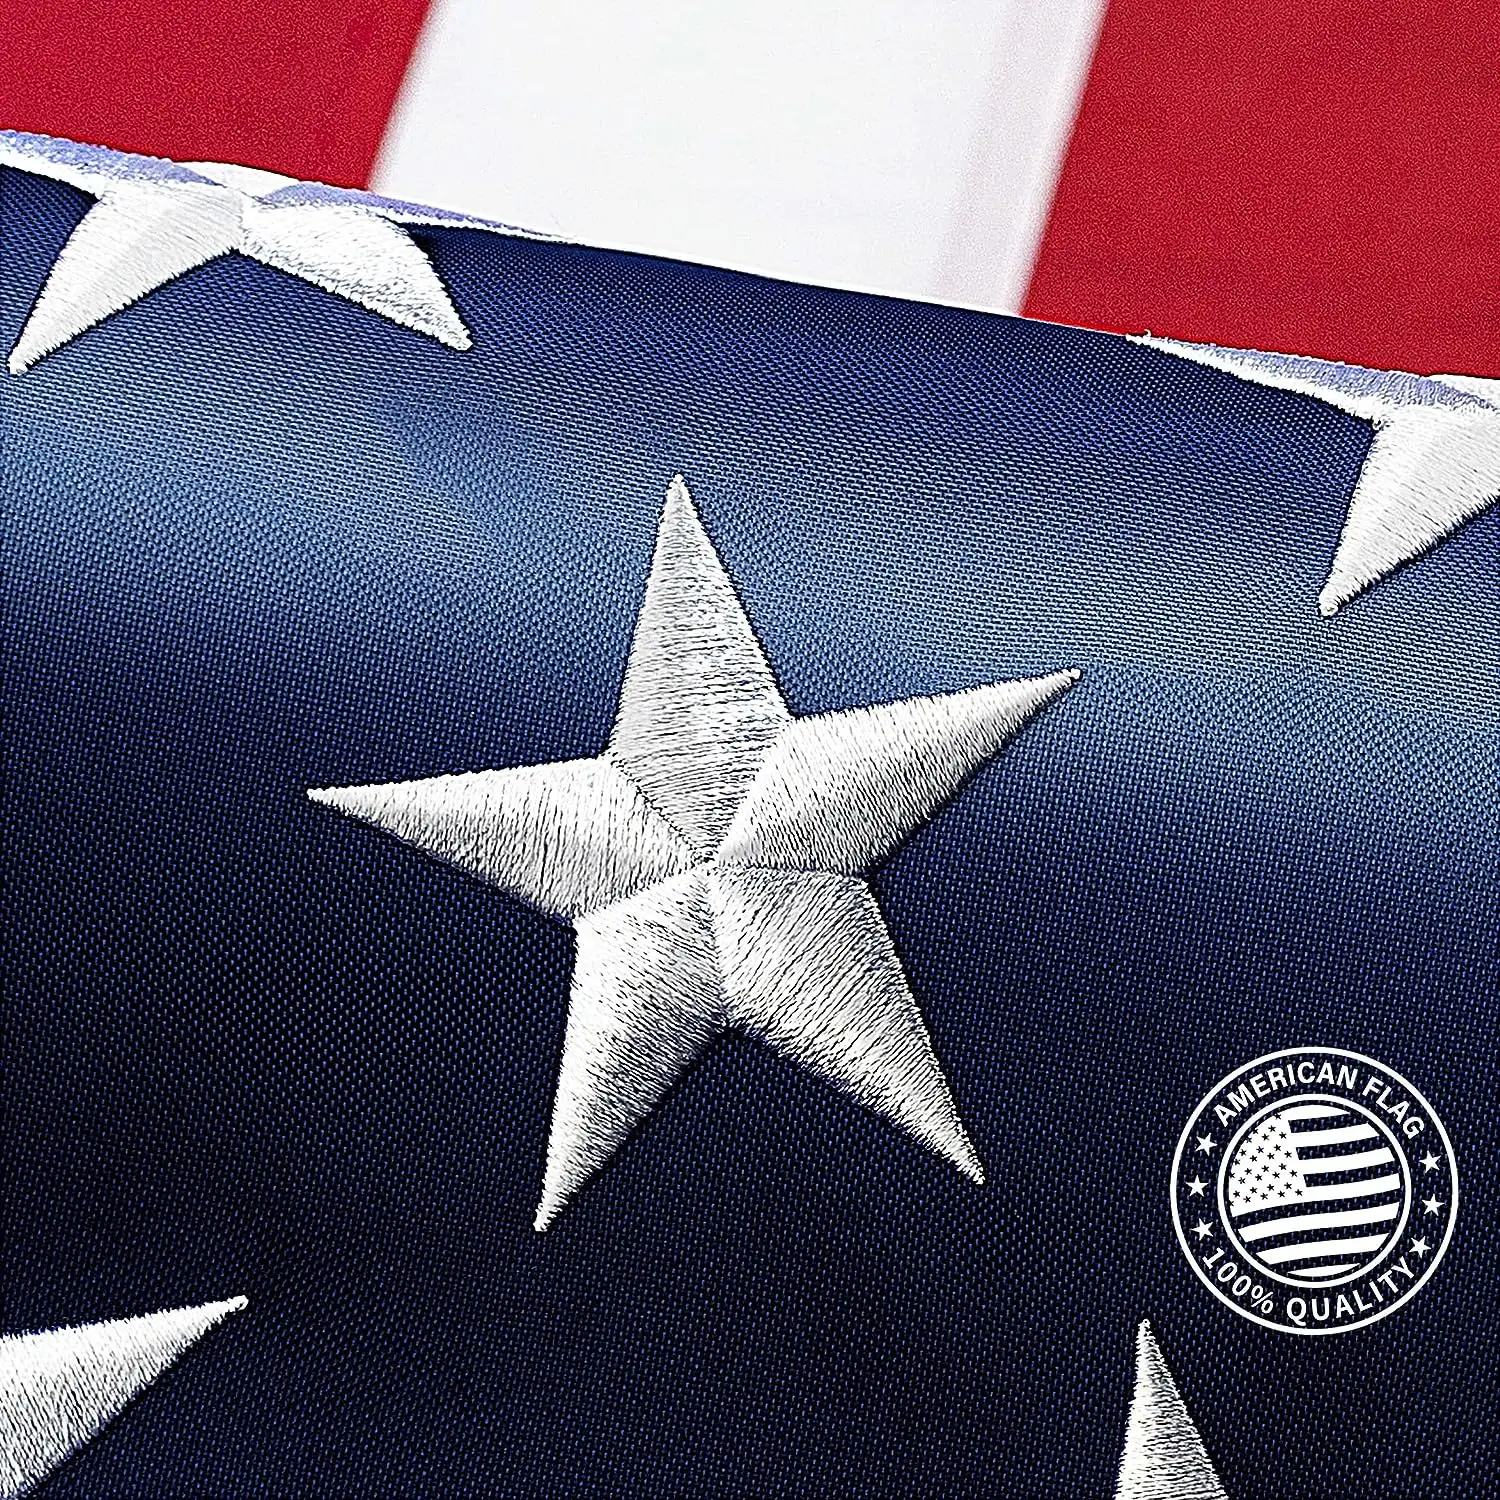 MELEX علم أمريكا للزينة طباعة رقمية شعار الأعلام 100% الولايات المتحدة الأمريكية المطرزة أمريكا الحرير الطباعة 2x3 3x5 علم أمريكا